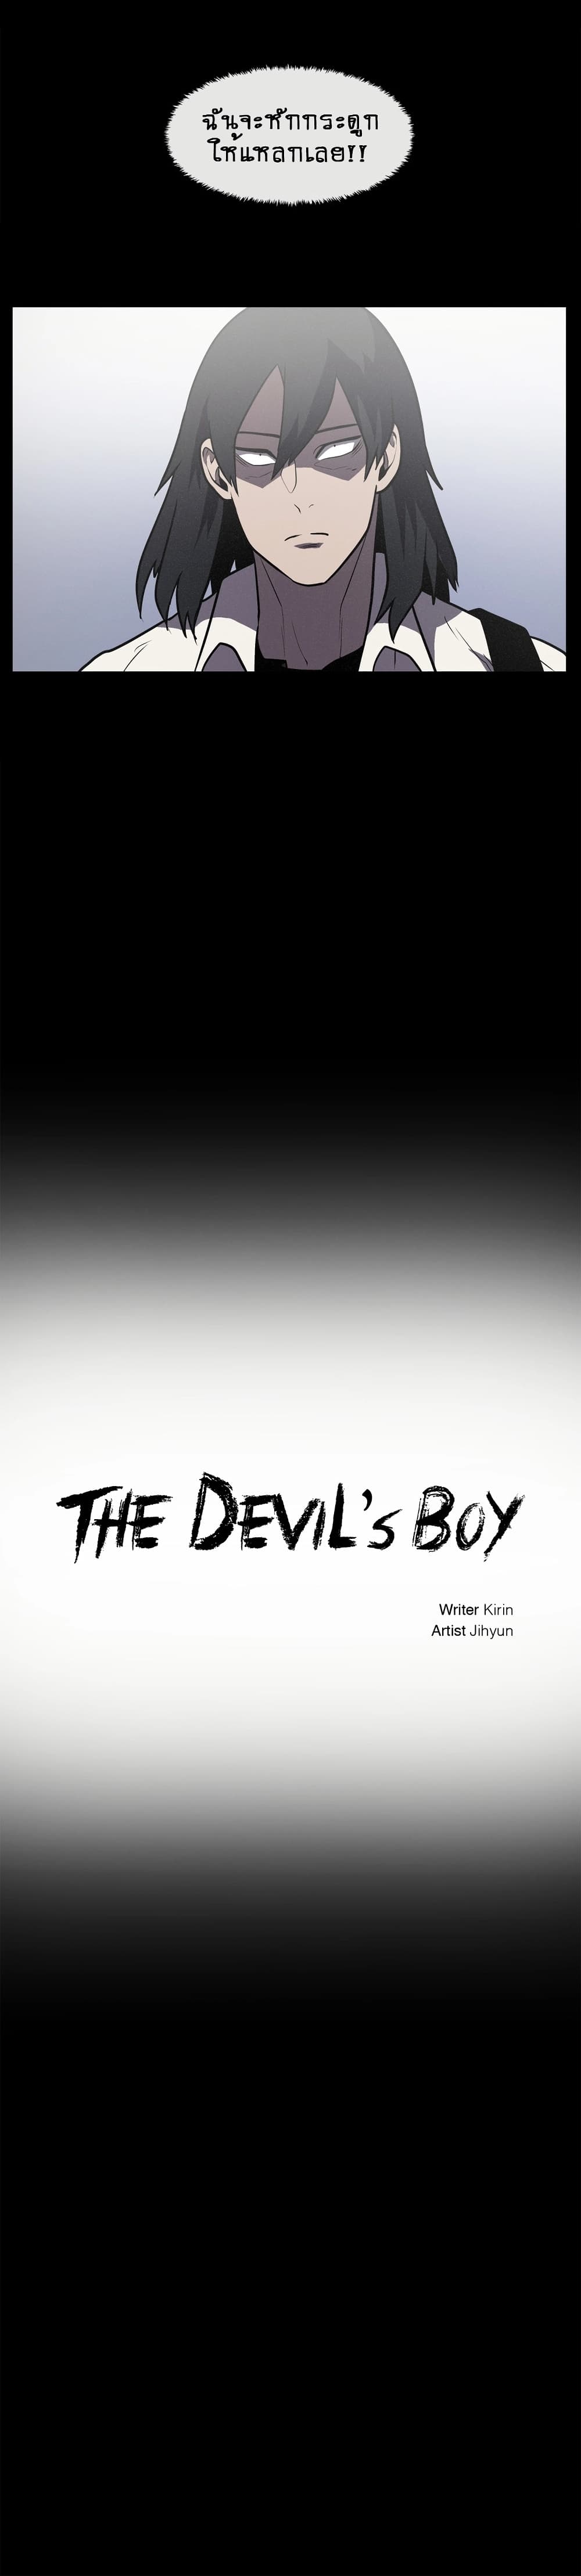 The Devil’s Boy14 (3)